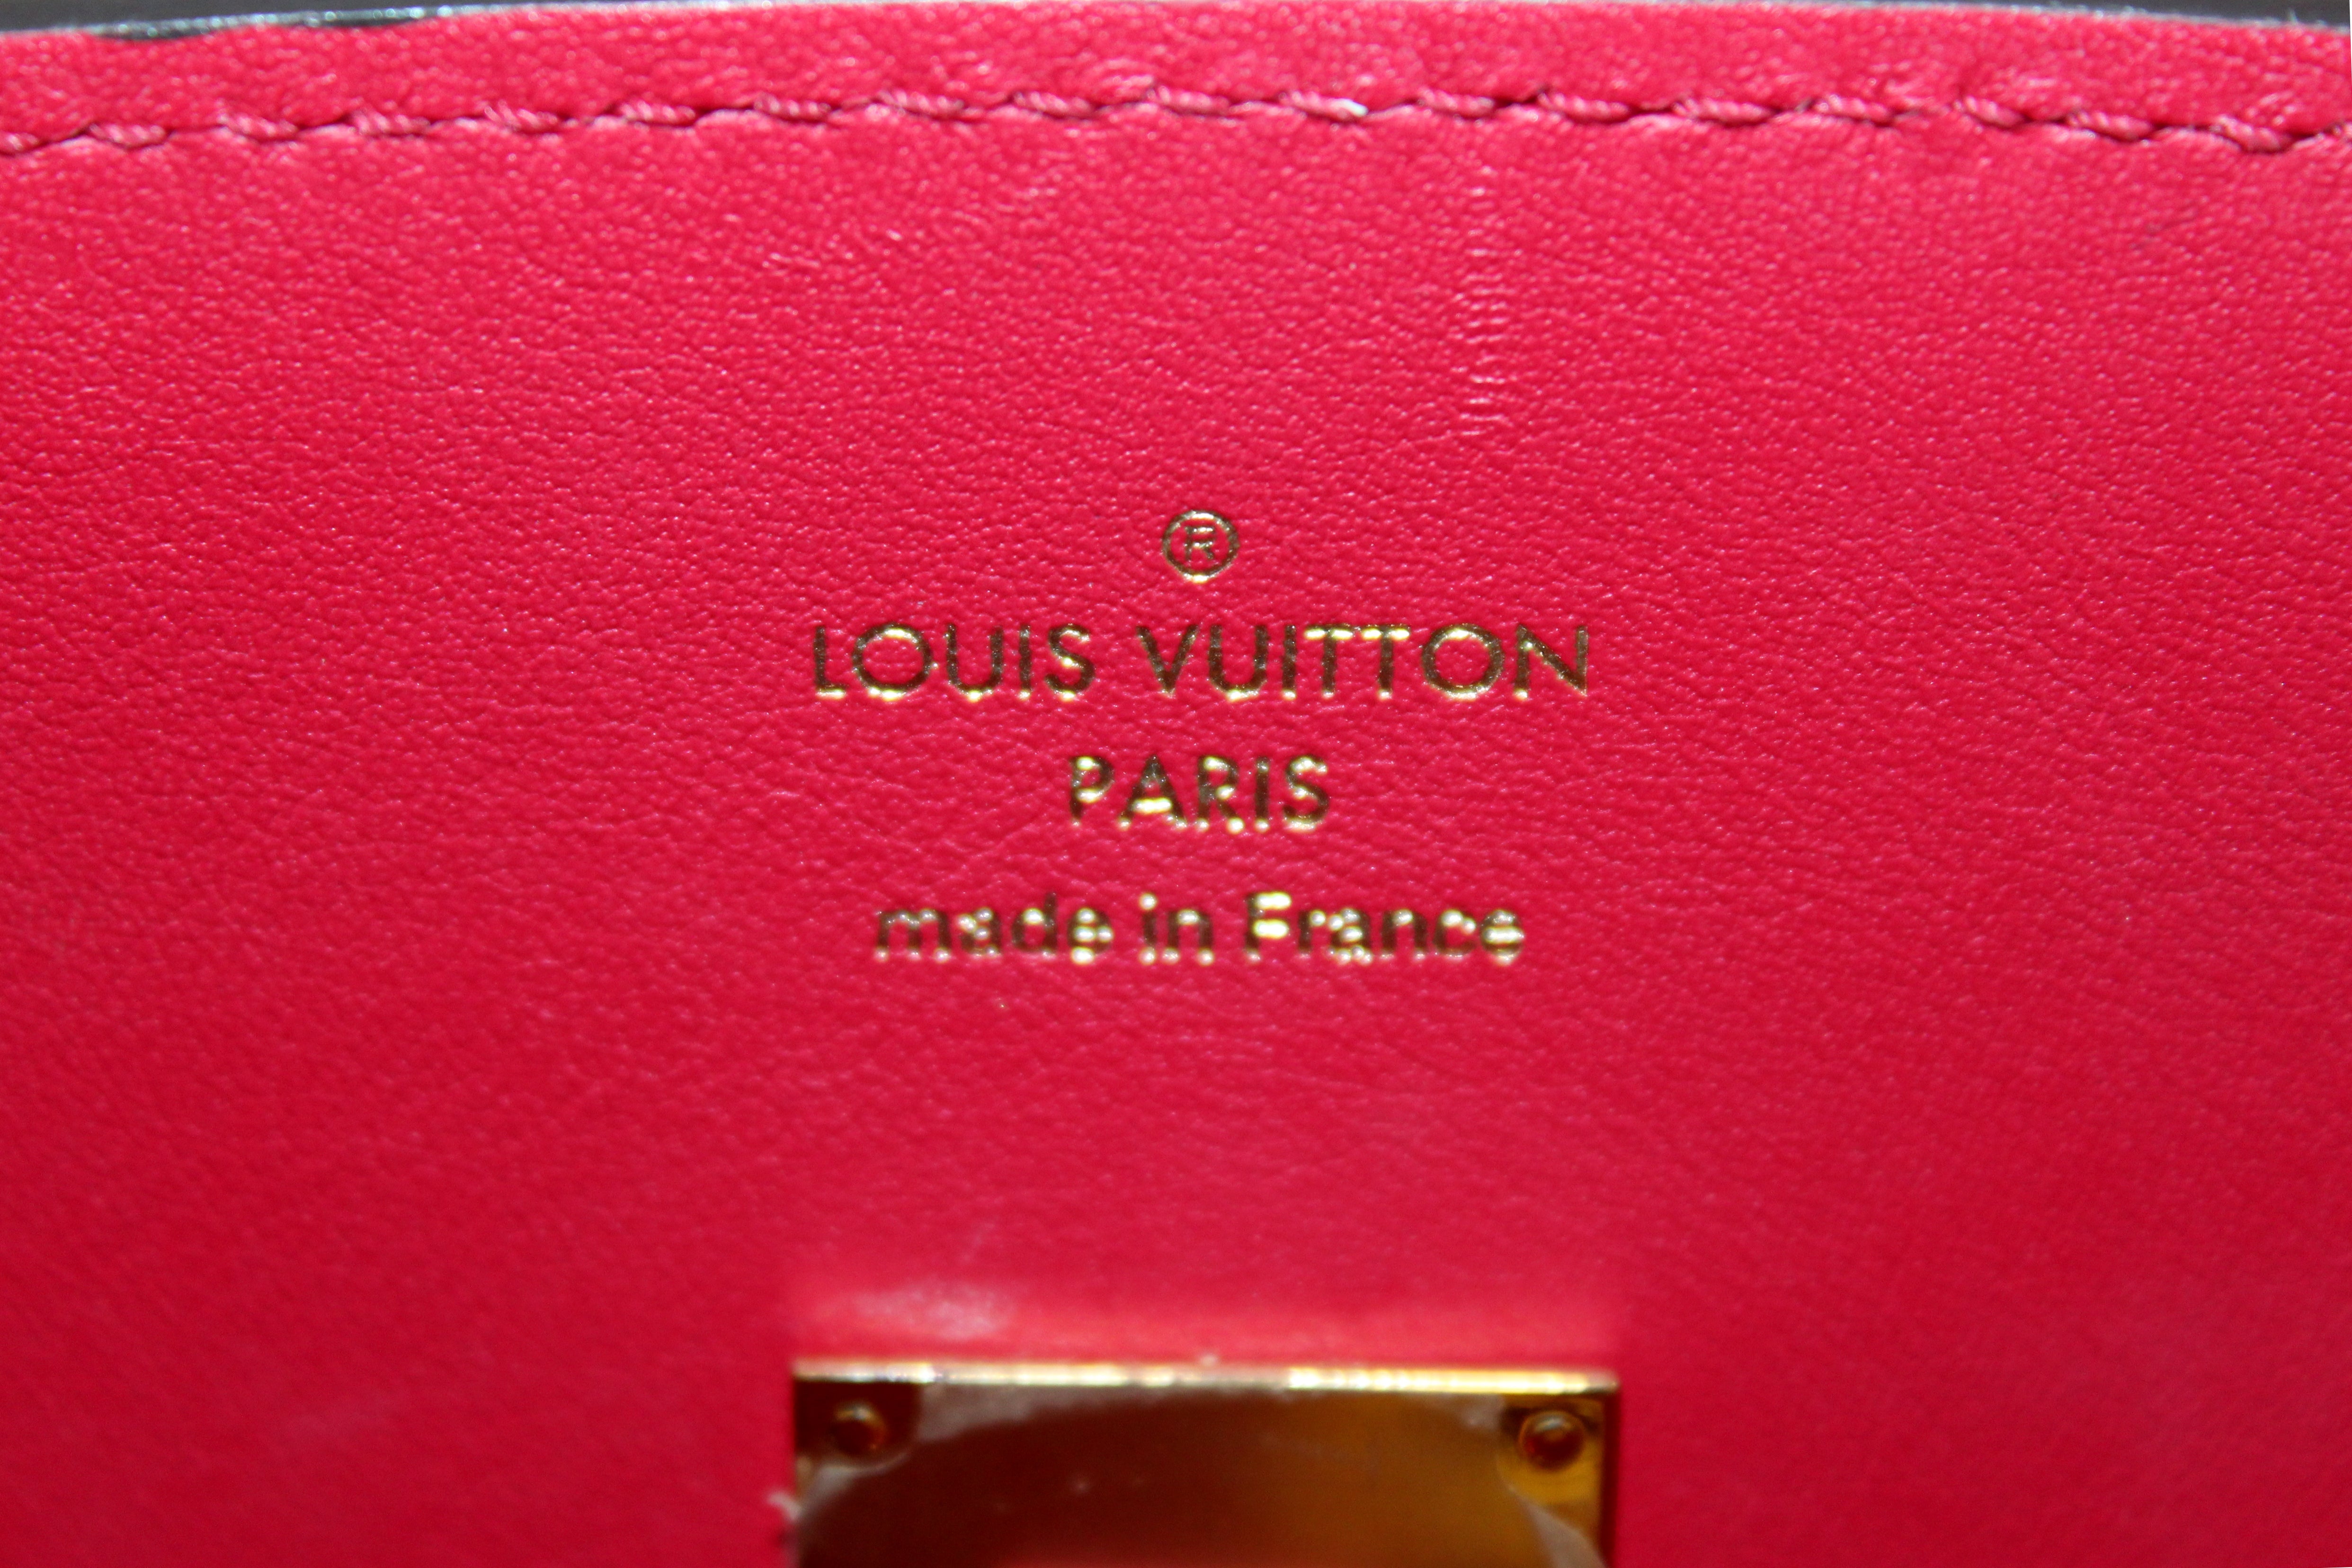 Authenticated Louis Vuitton Veau Nuage Milla PM Red Calf Leather